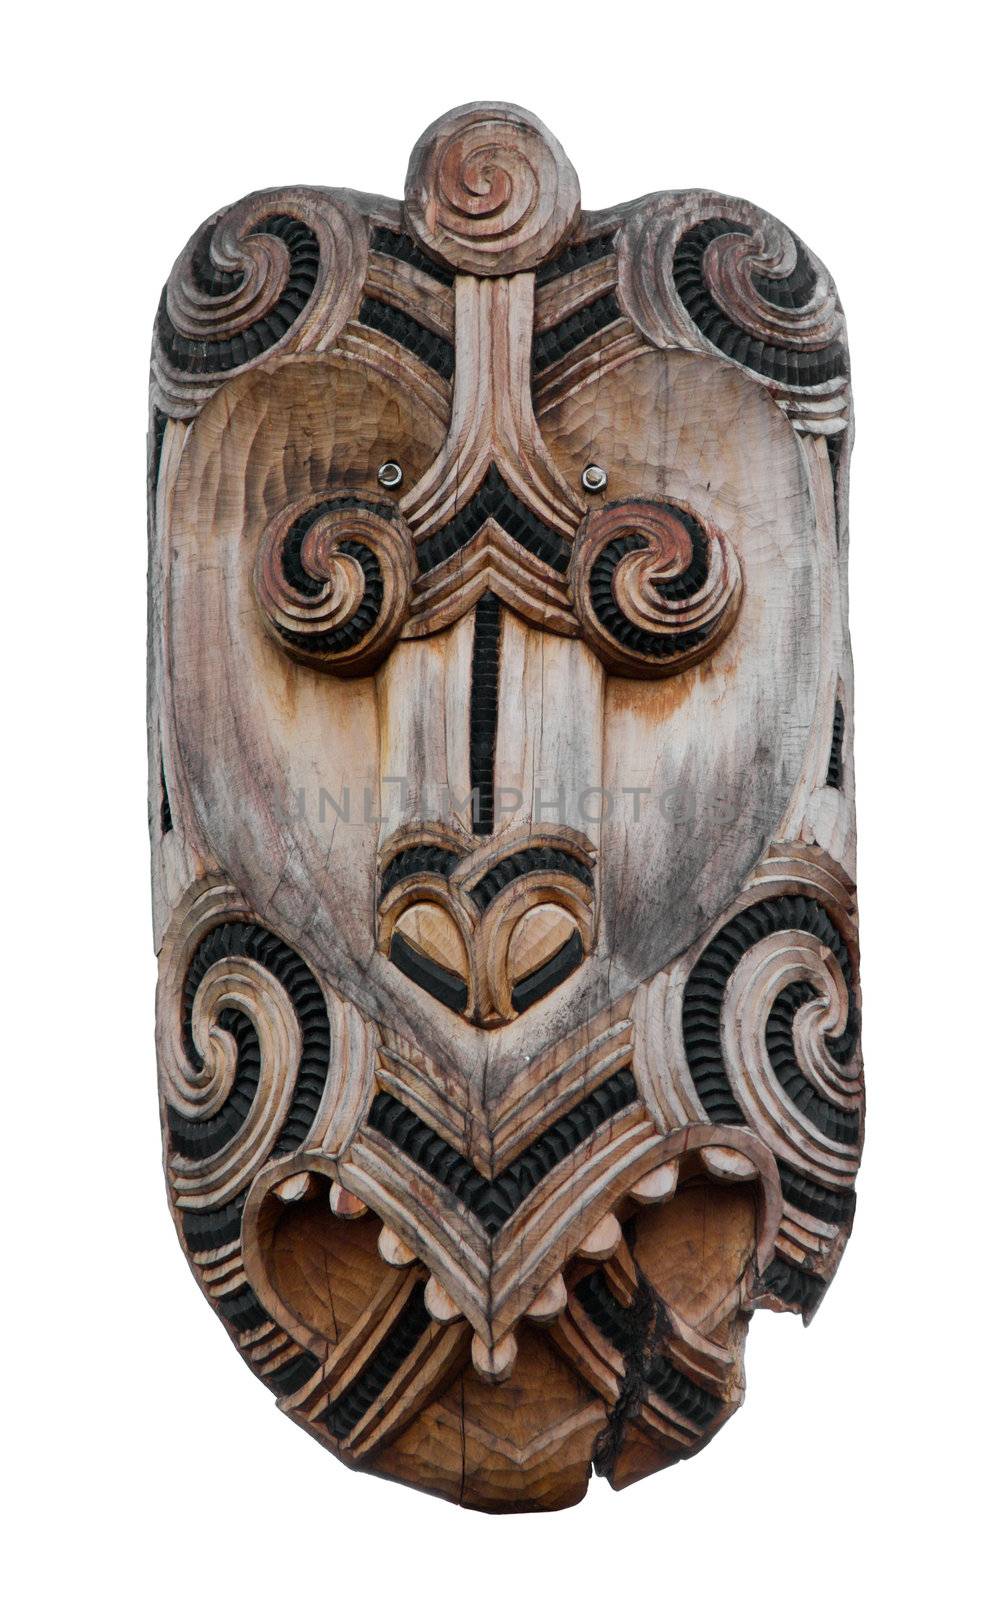 Maori carving by RuthBlack